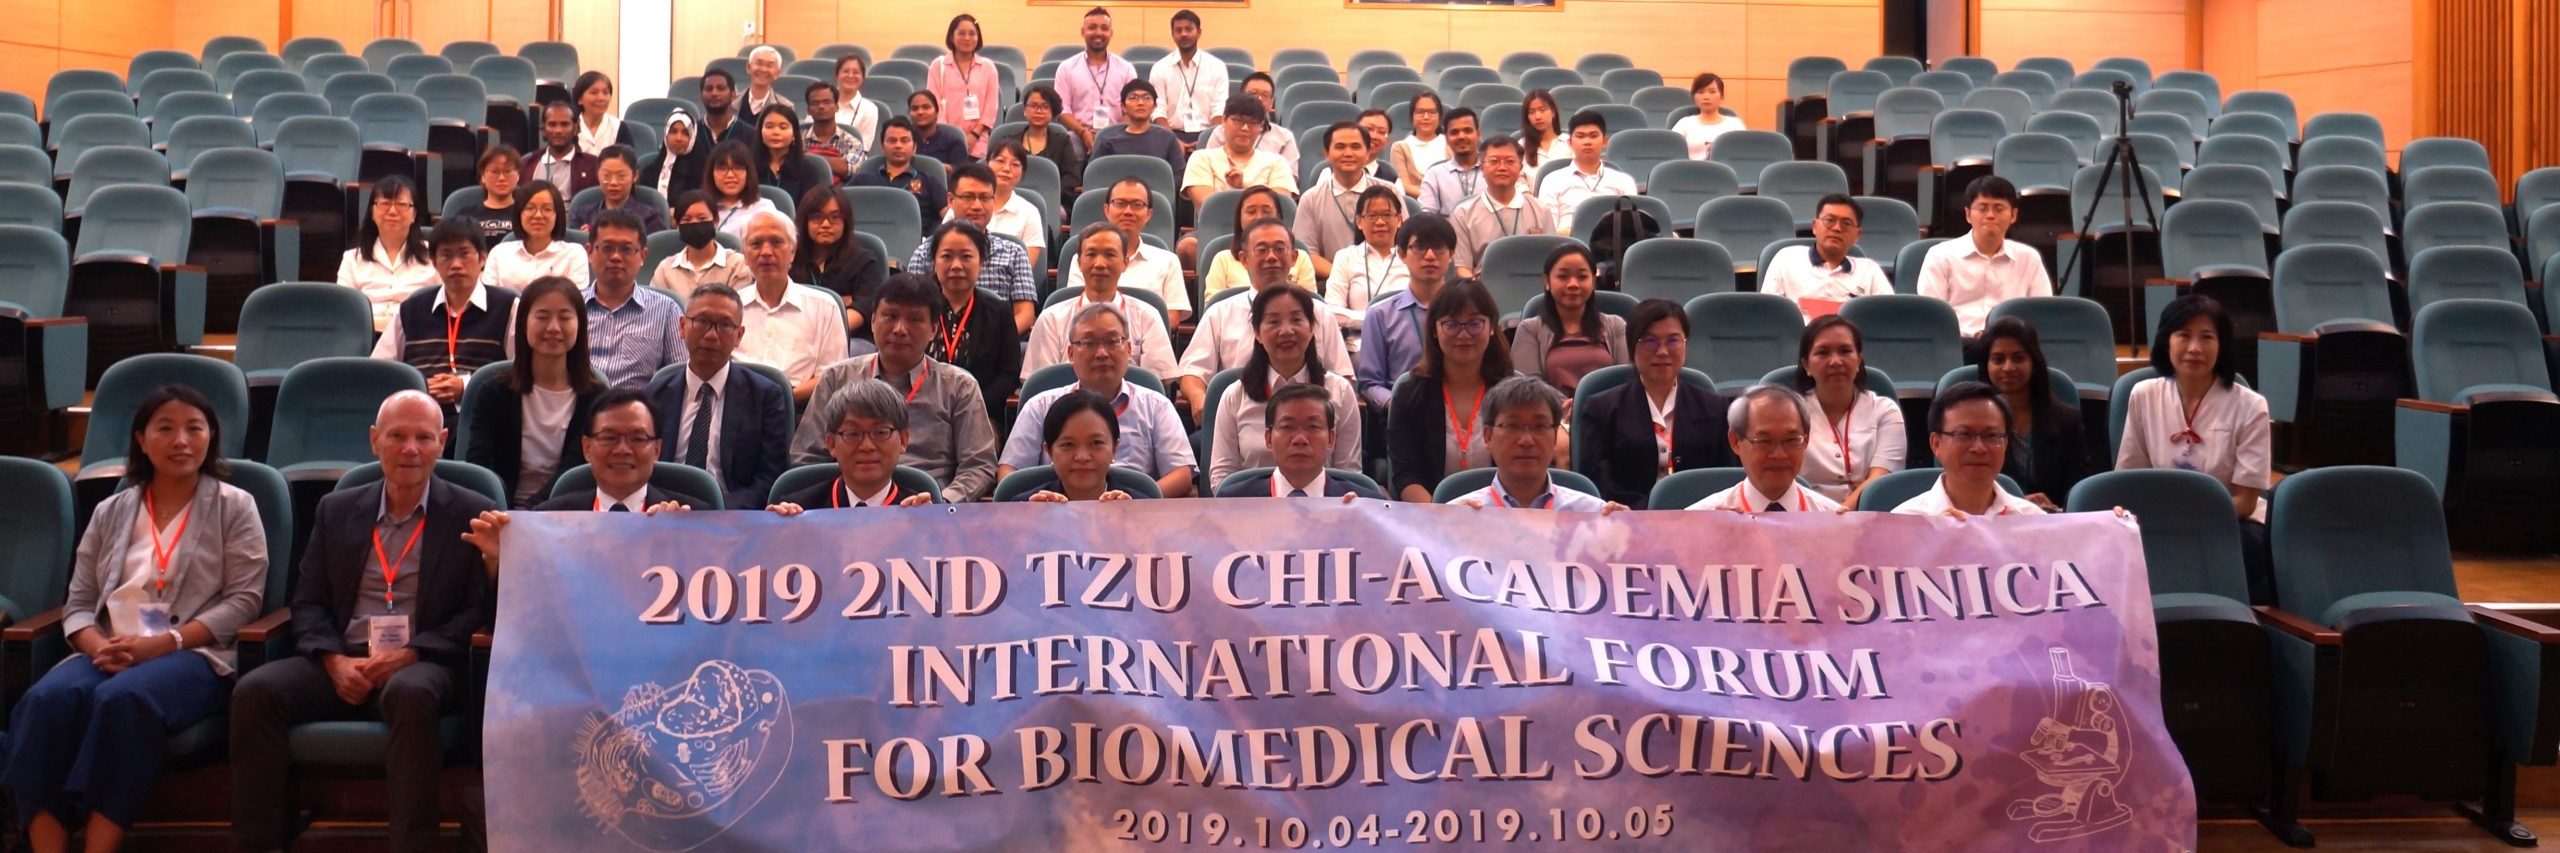 Tzu Chi-Academia Sinica Biomedical Conference (TCASB)